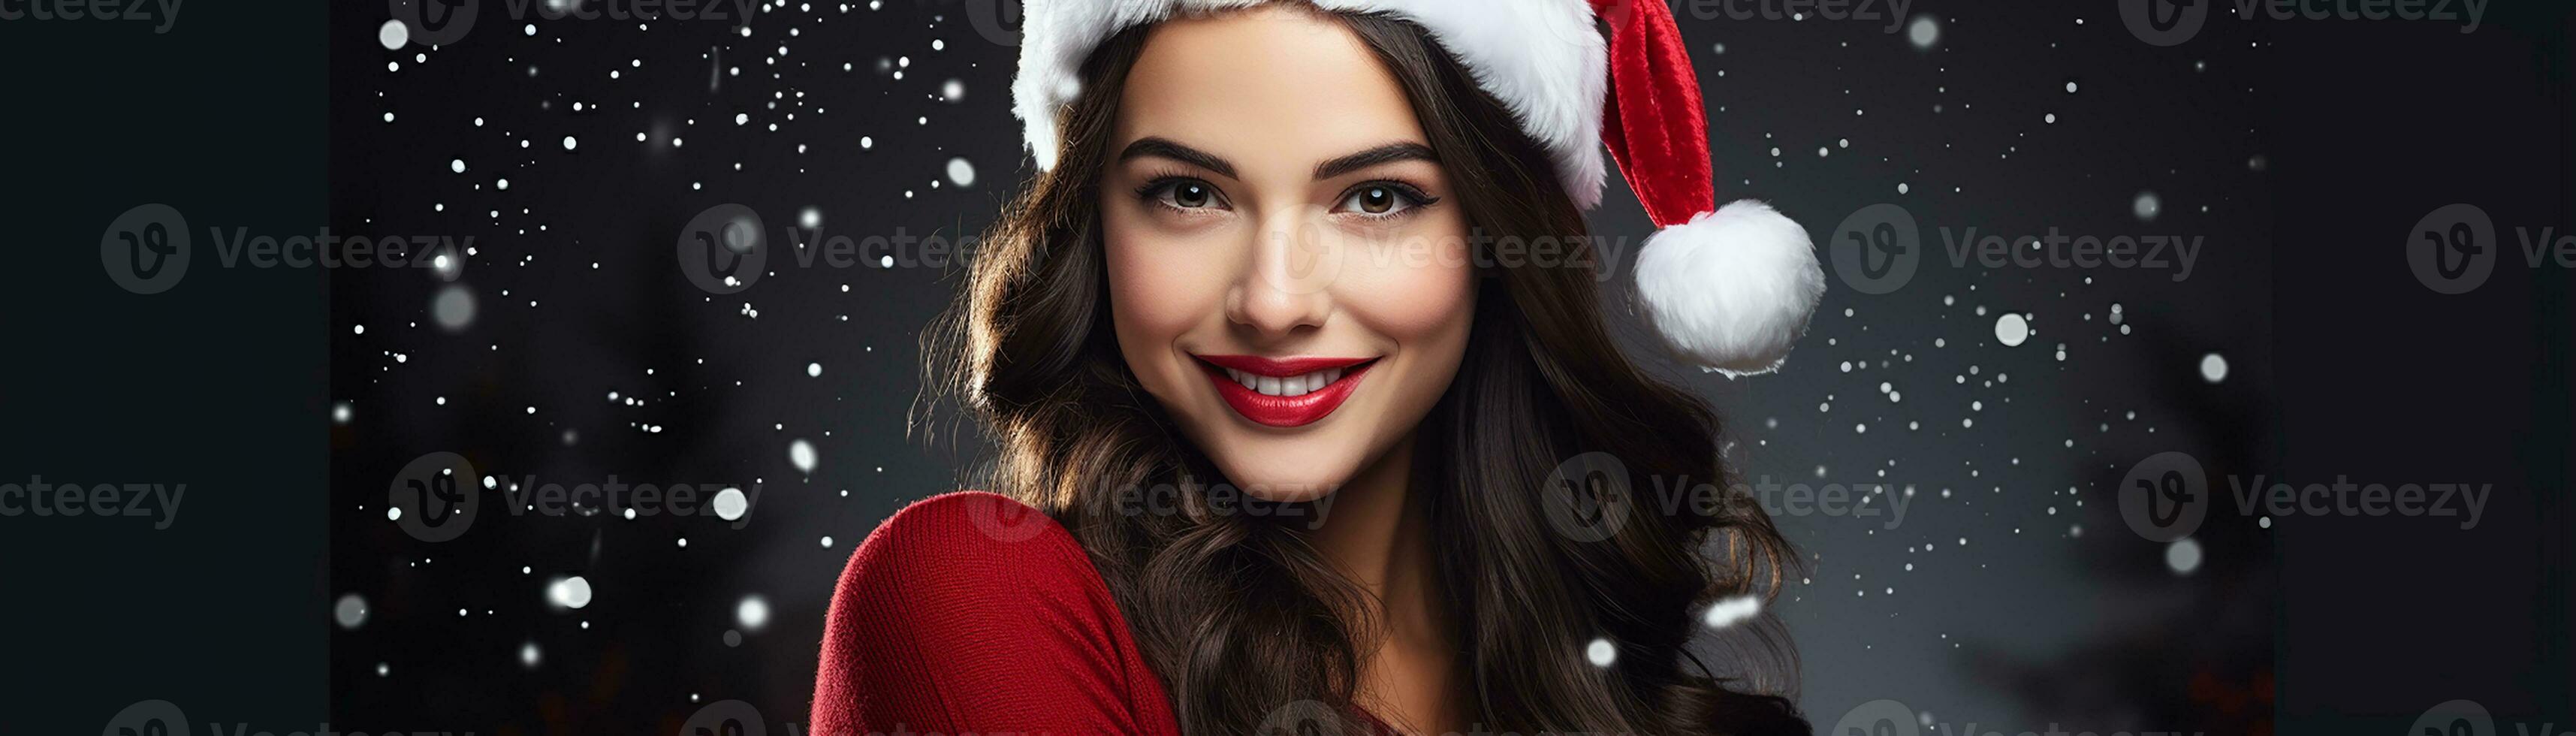 ai gegenereerd portret van mooi glimlachen vrouw in de kerstman claus vervelend foto